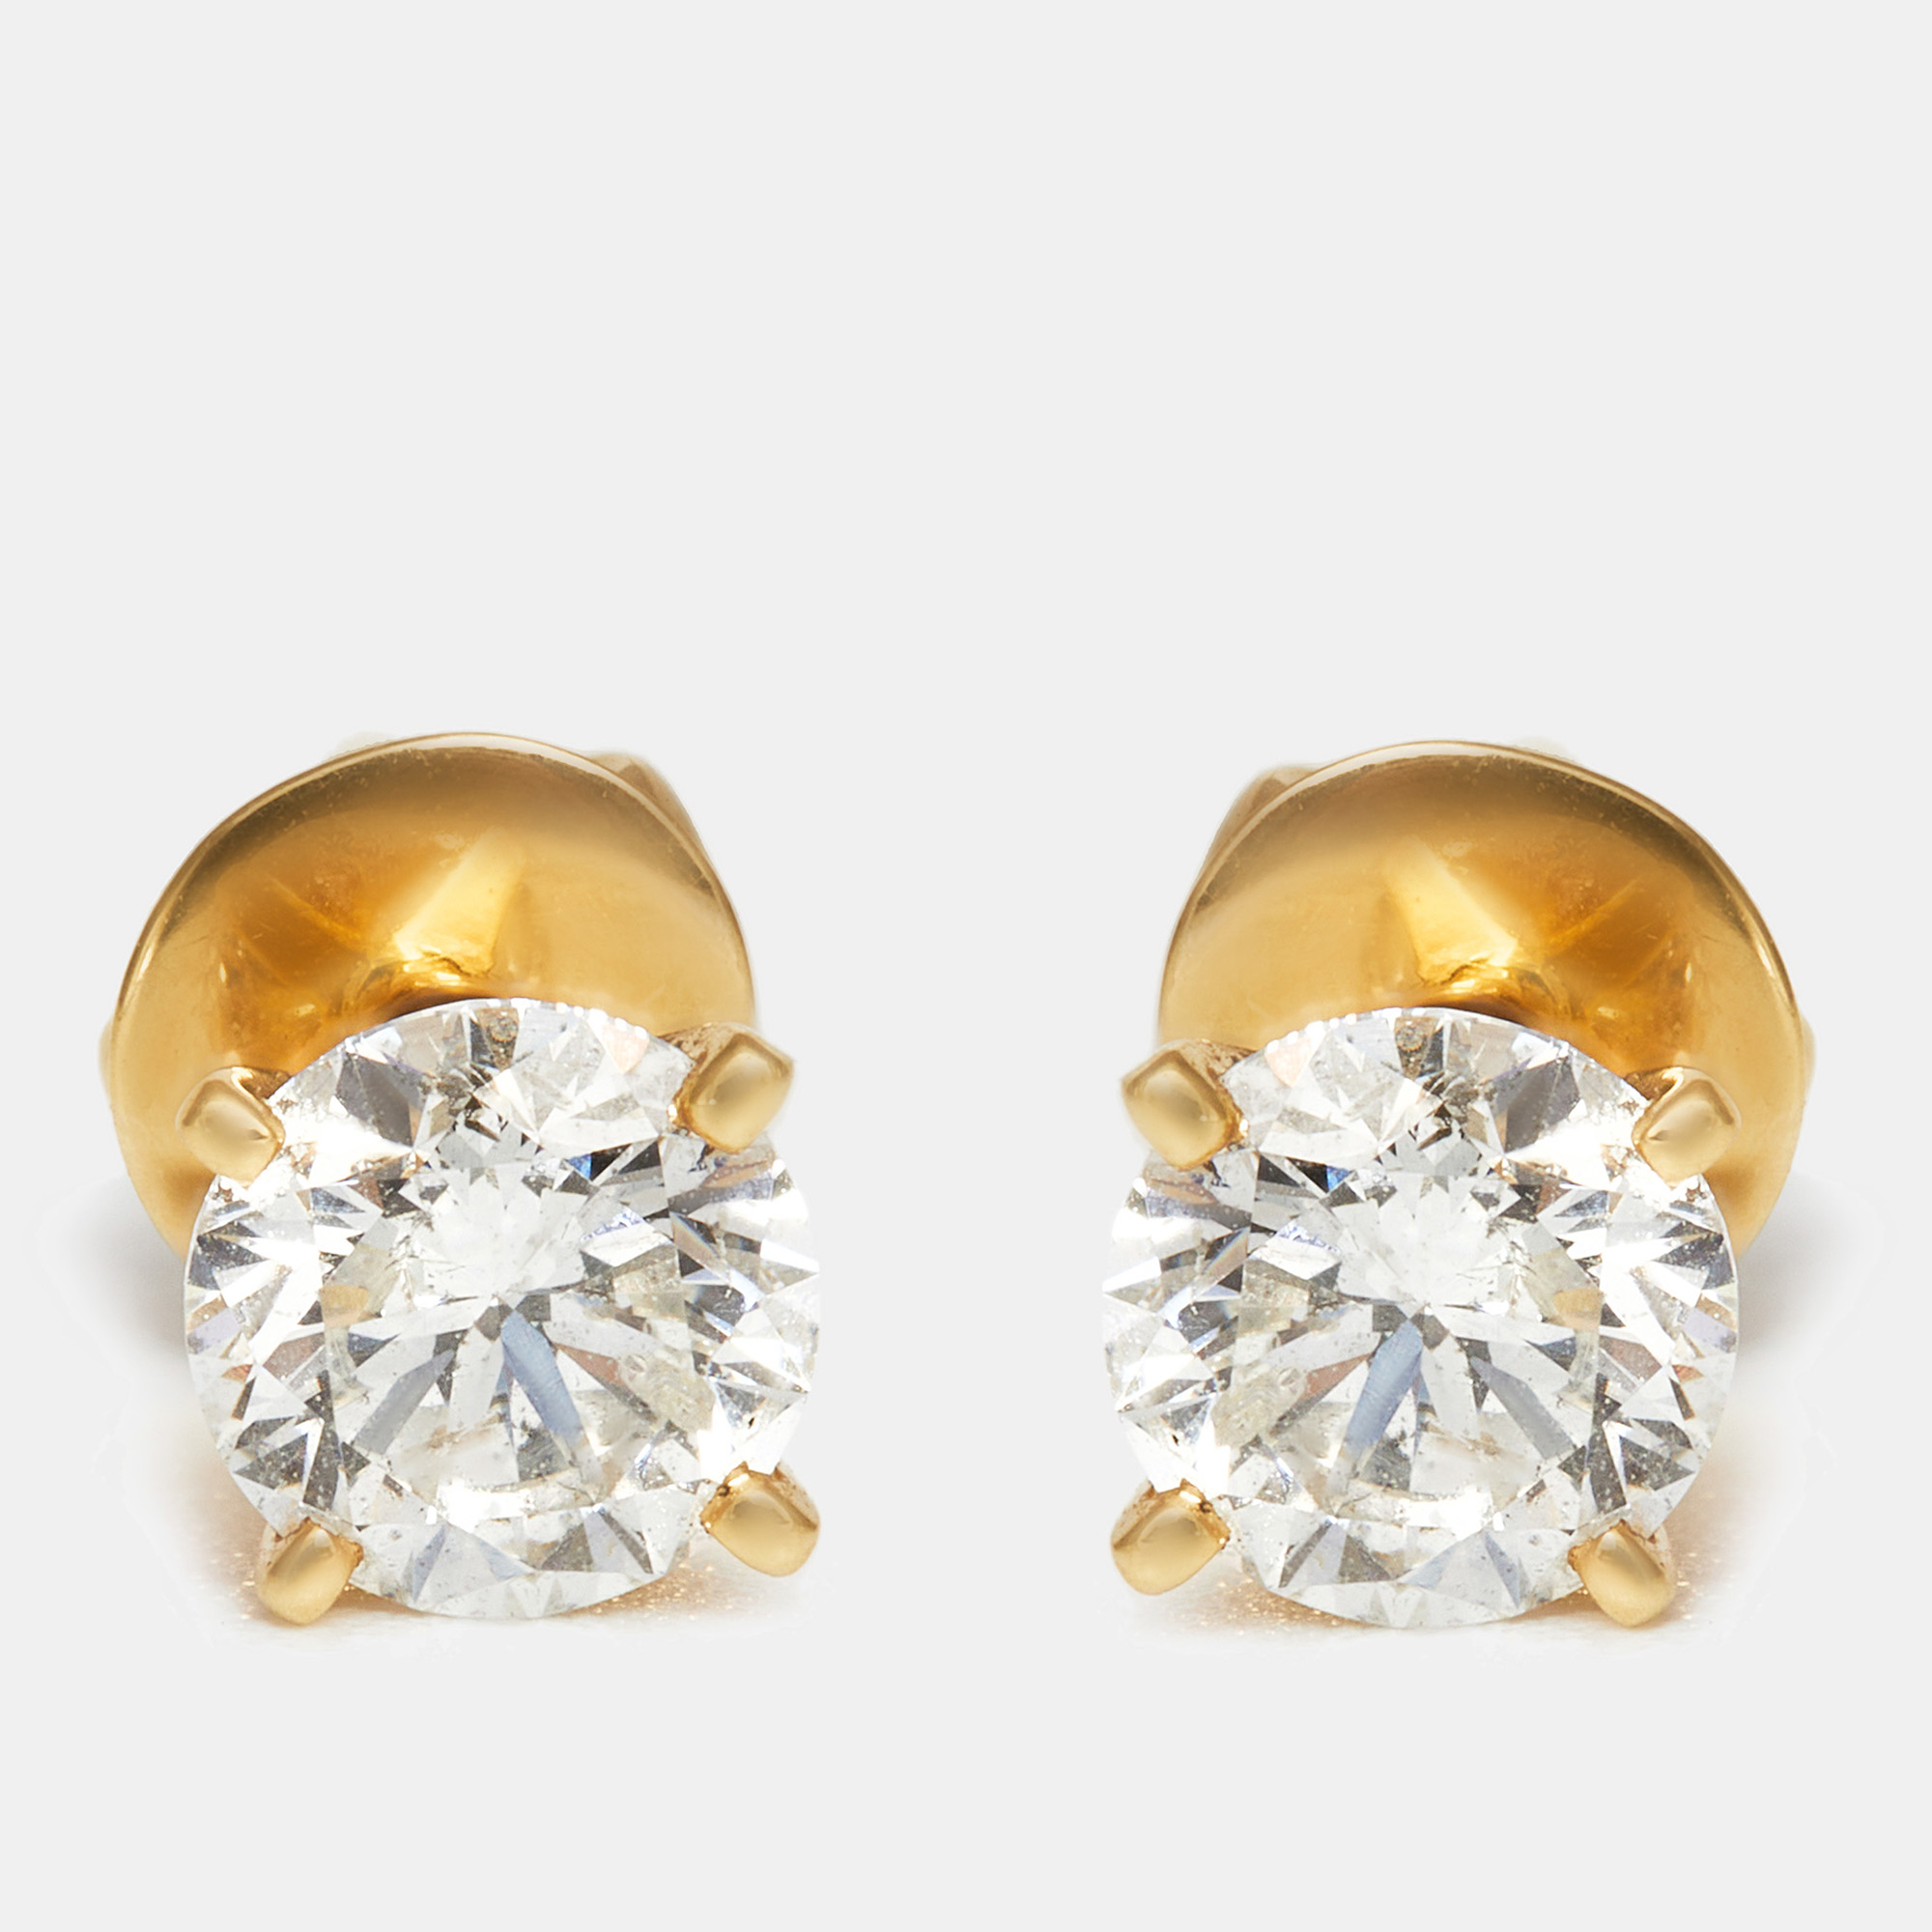 The diamond edit daily wear elegant solitaire diamonds (0.78 ct) 18k yellow gold stud earrings